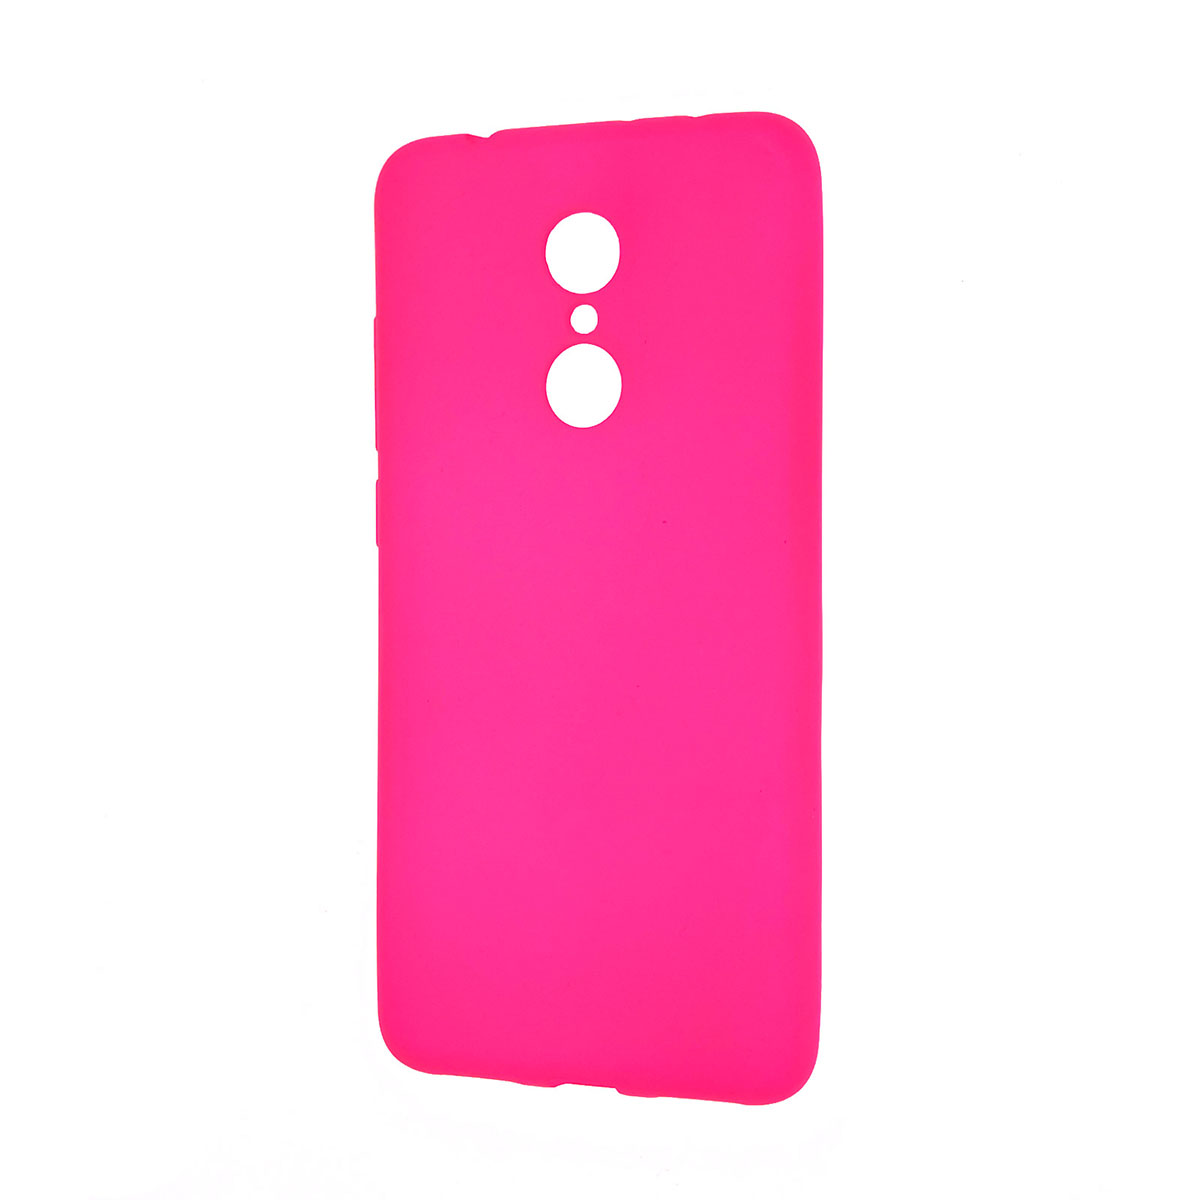 Чехол накладка Fashion Case для XIAOMI Redmi 5, силикон, цвет розовый.